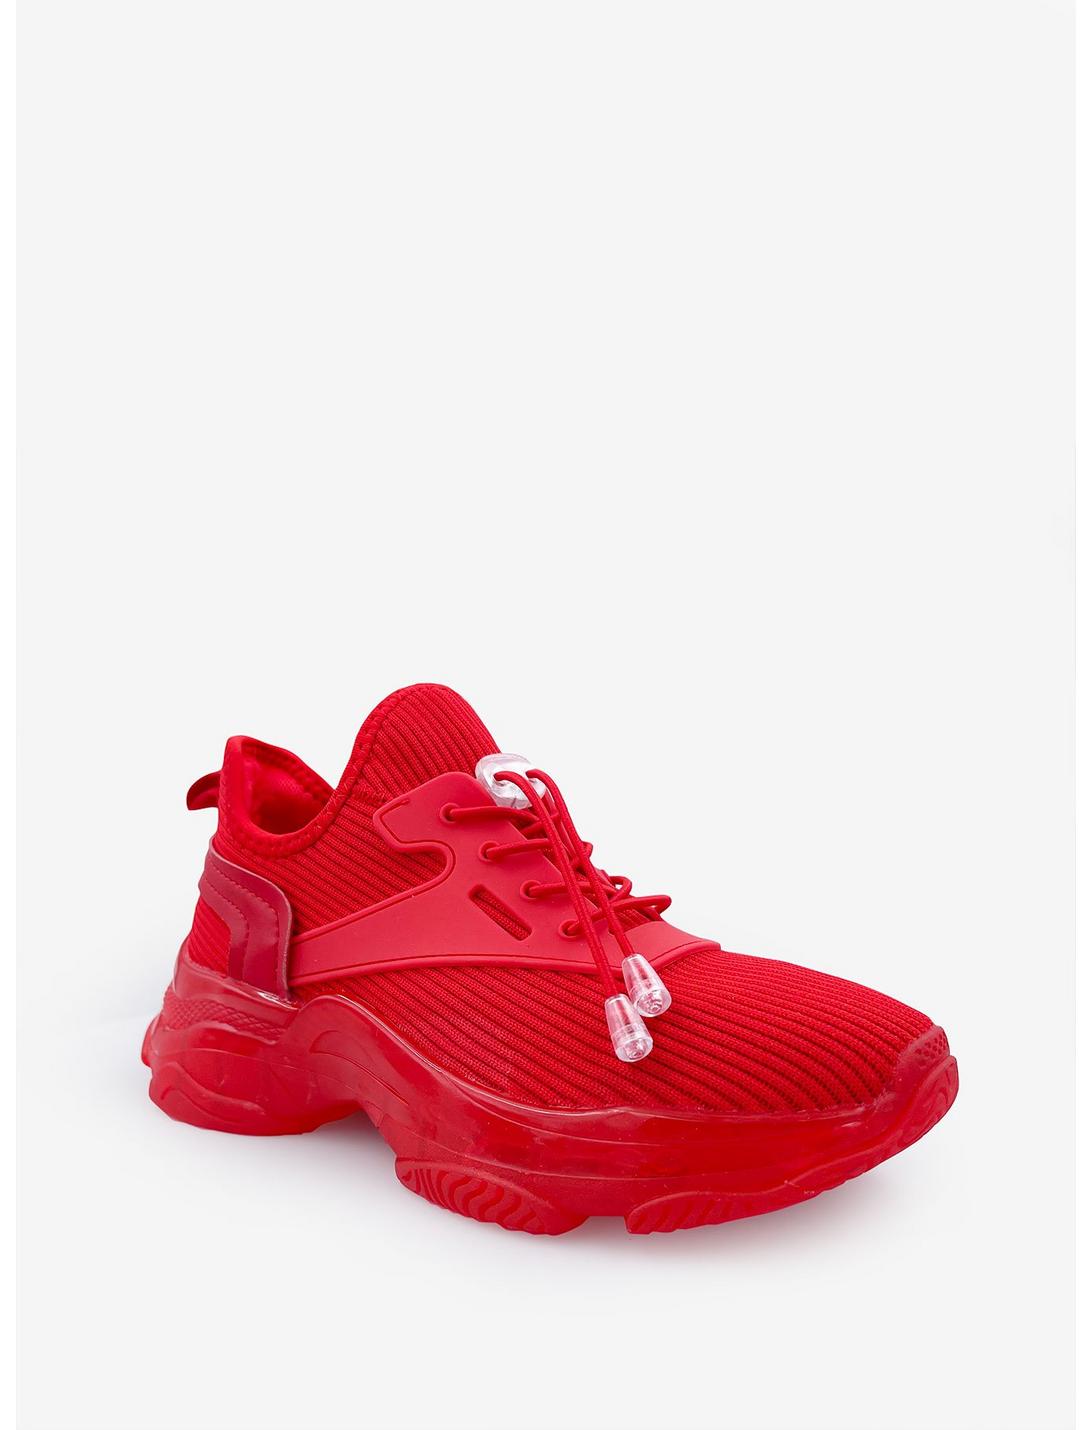 Sloan Knit Upper Sneaker with Platform Sole Red, RED, hi-res